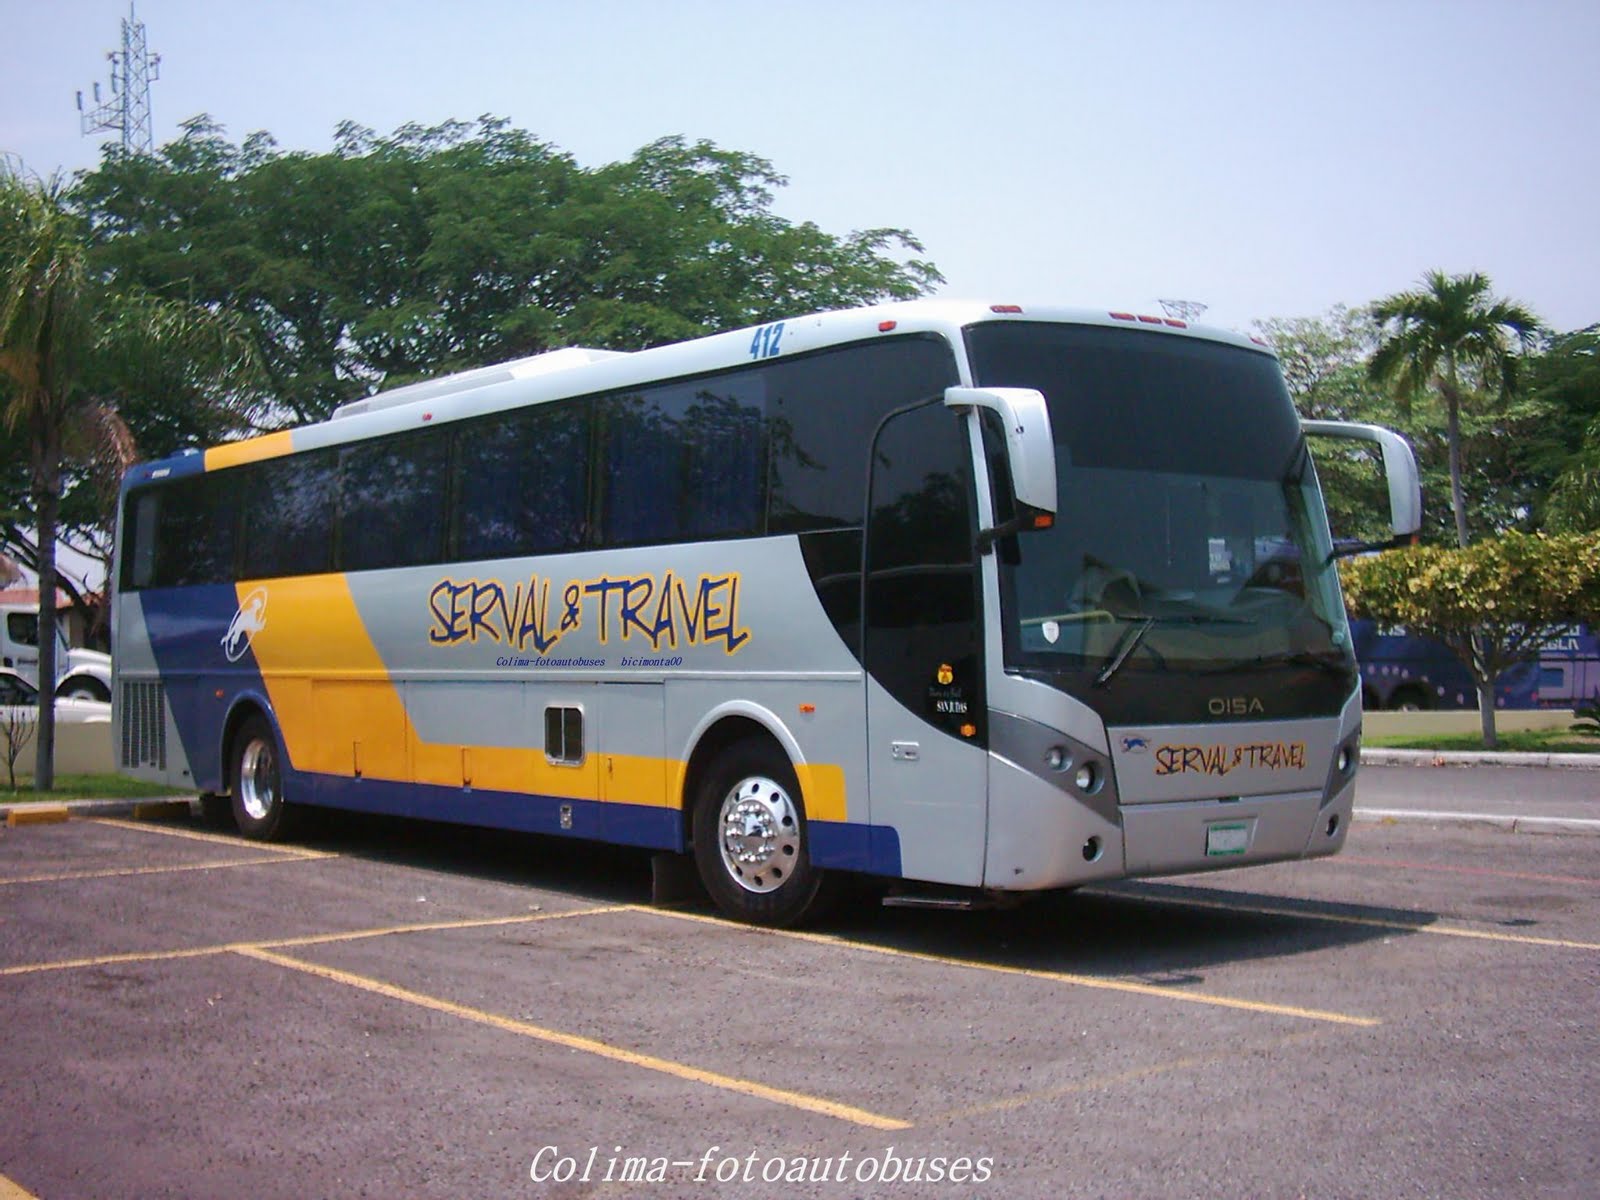 Colima_Fotoautobuses: mayo 2011